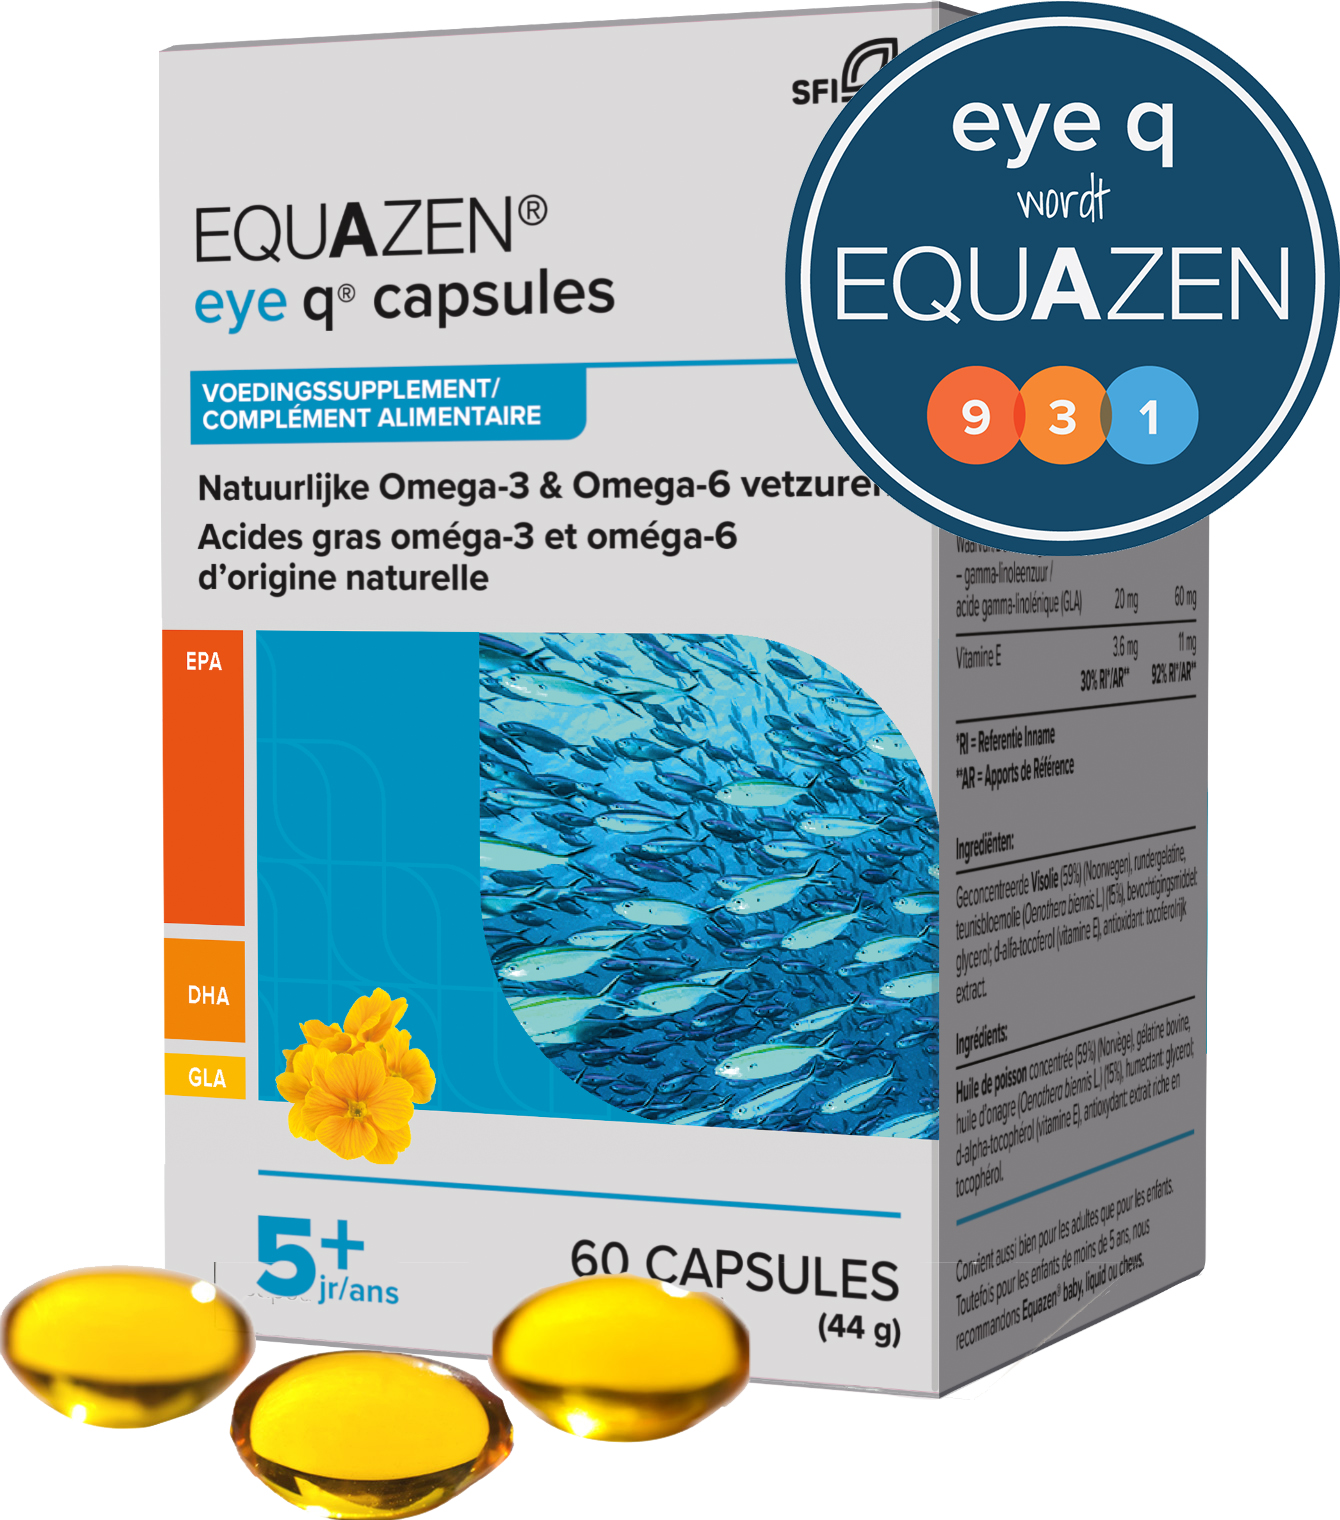 Equazen 9.3.1 Capsules 60 - omega 3- en 6-vetzuren EPA, DHA, GLA - eye q wordt equazen